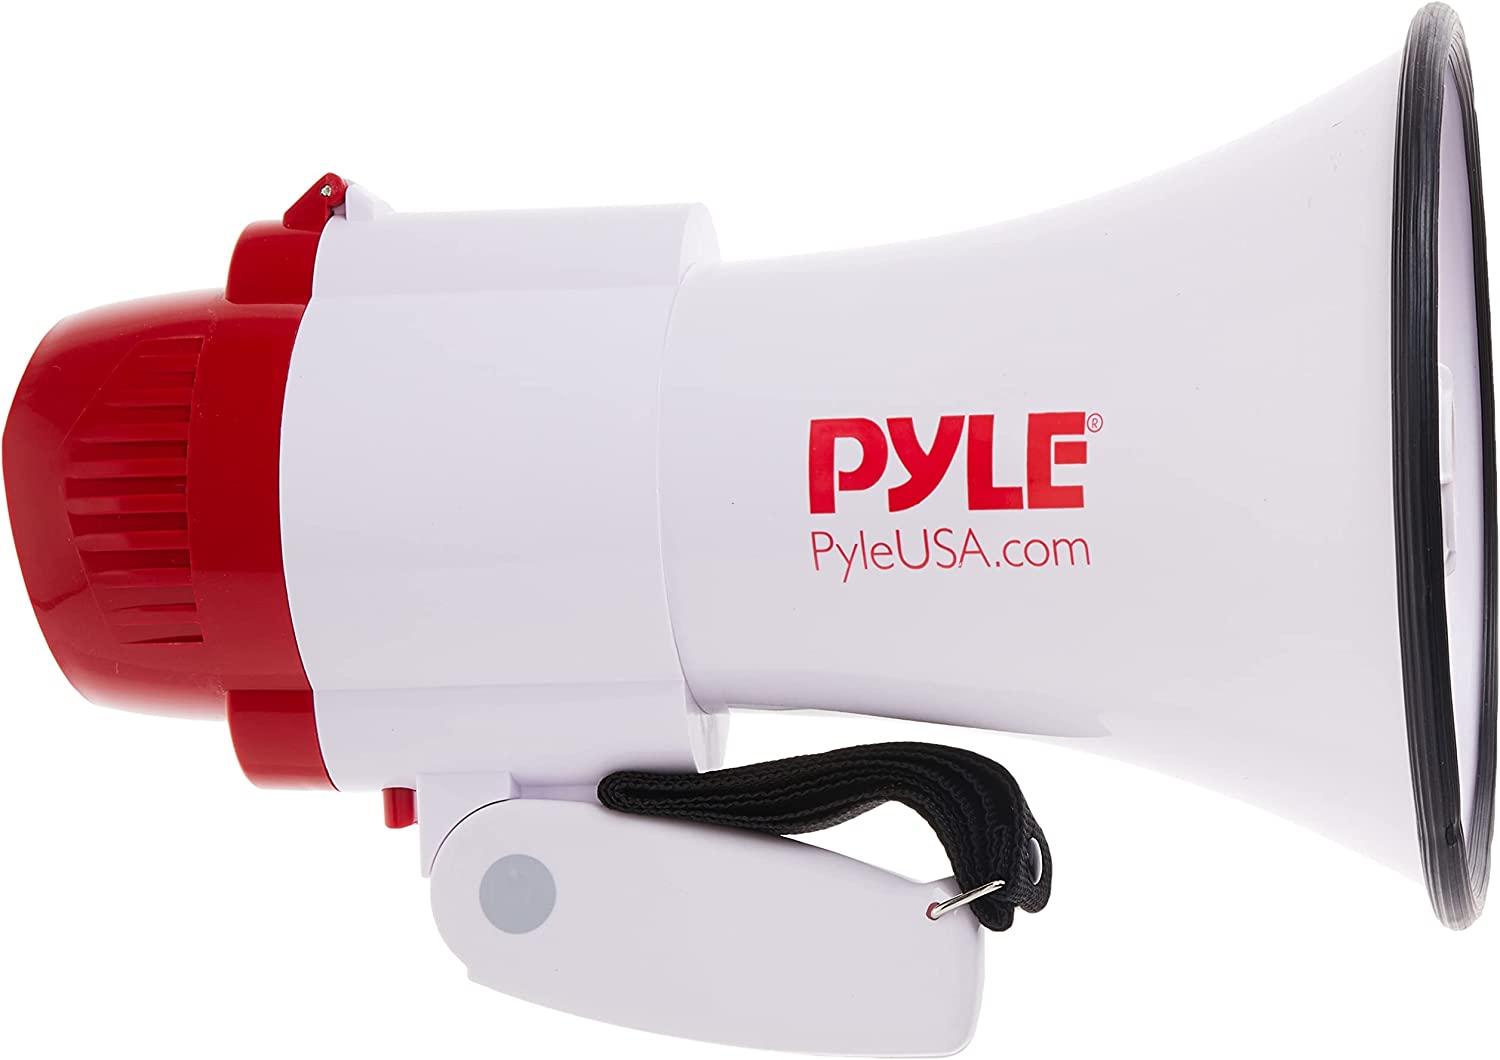 Pyle-Pro PMP30 Professional Megaphone Bullhorn for $11.15